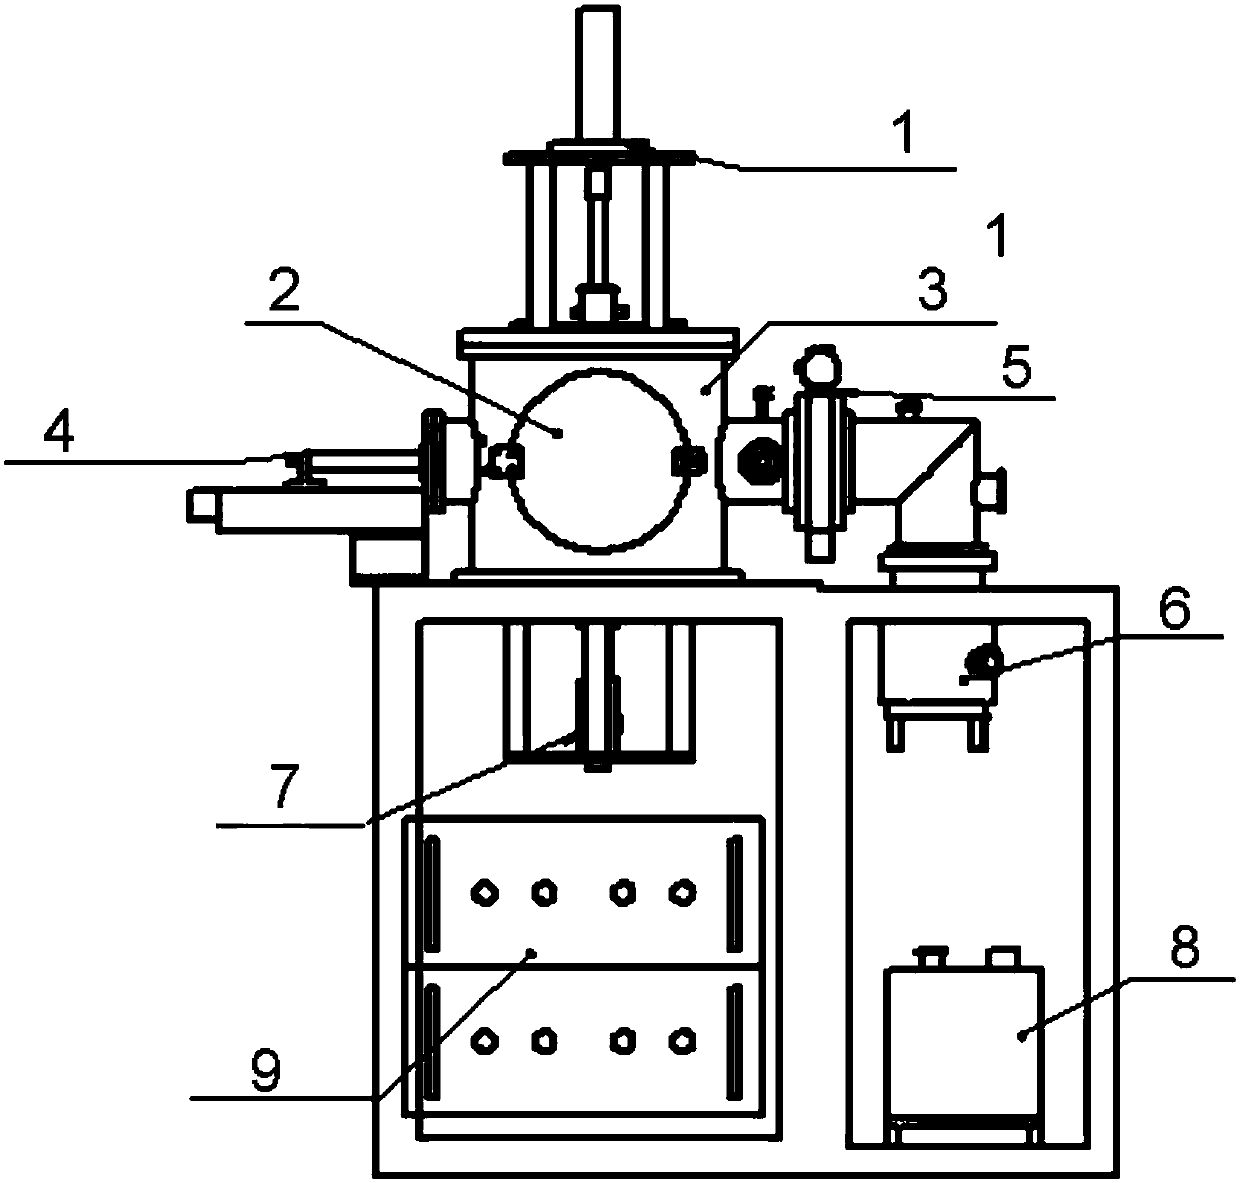 Probe type high-flux spark plasma sintering equipment